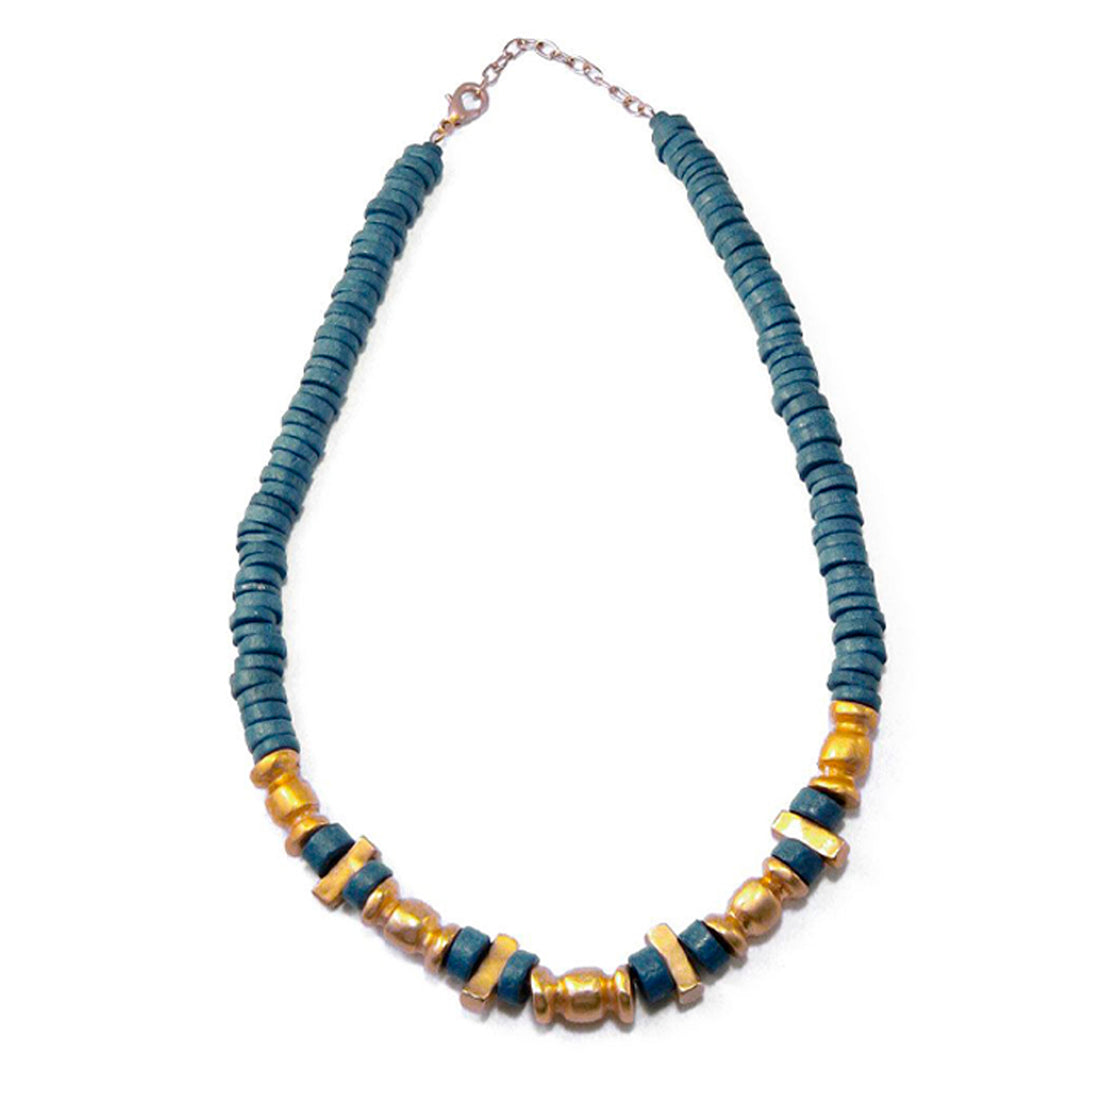 Precolumbian Beads and Blue Ceramics Necklace